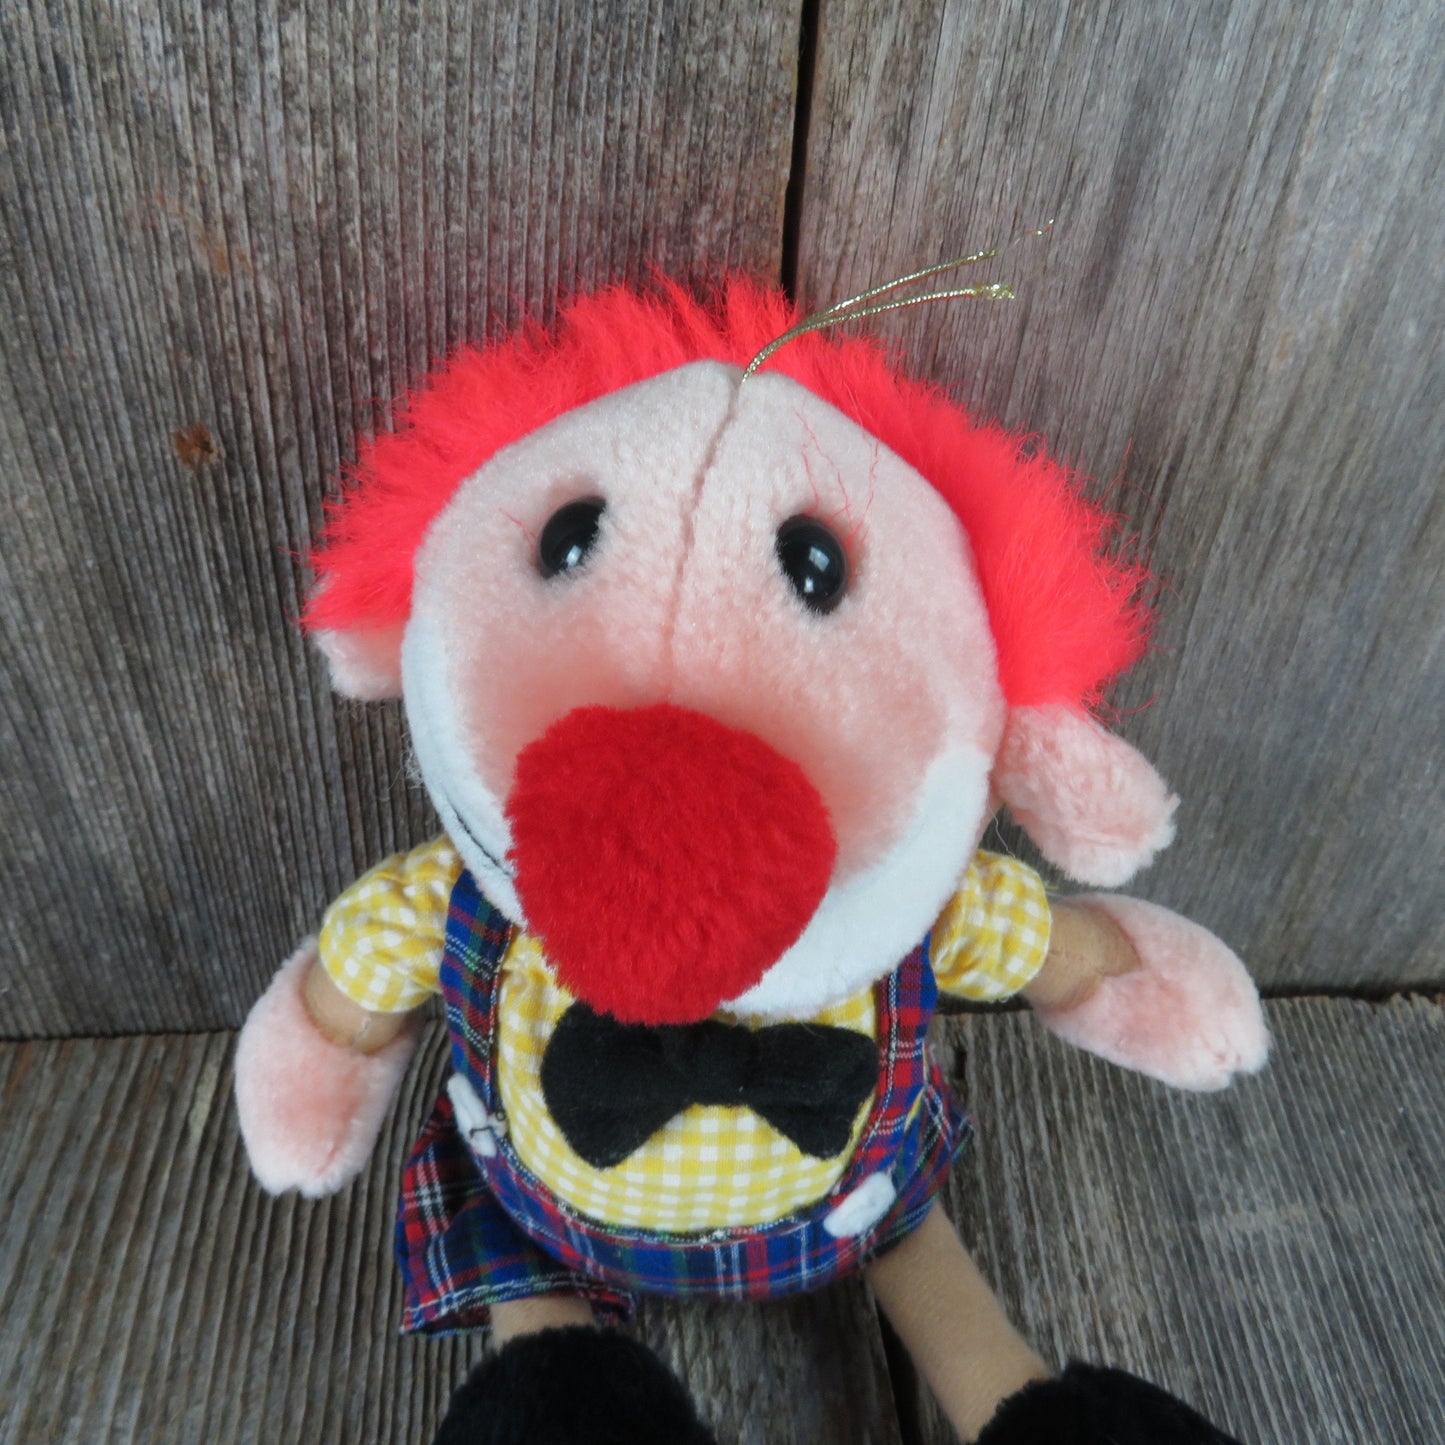 Vintage Clown Plush Doll Red Nose Yellow Shirt Bib Overalls Orange Hair Stuffed Animal